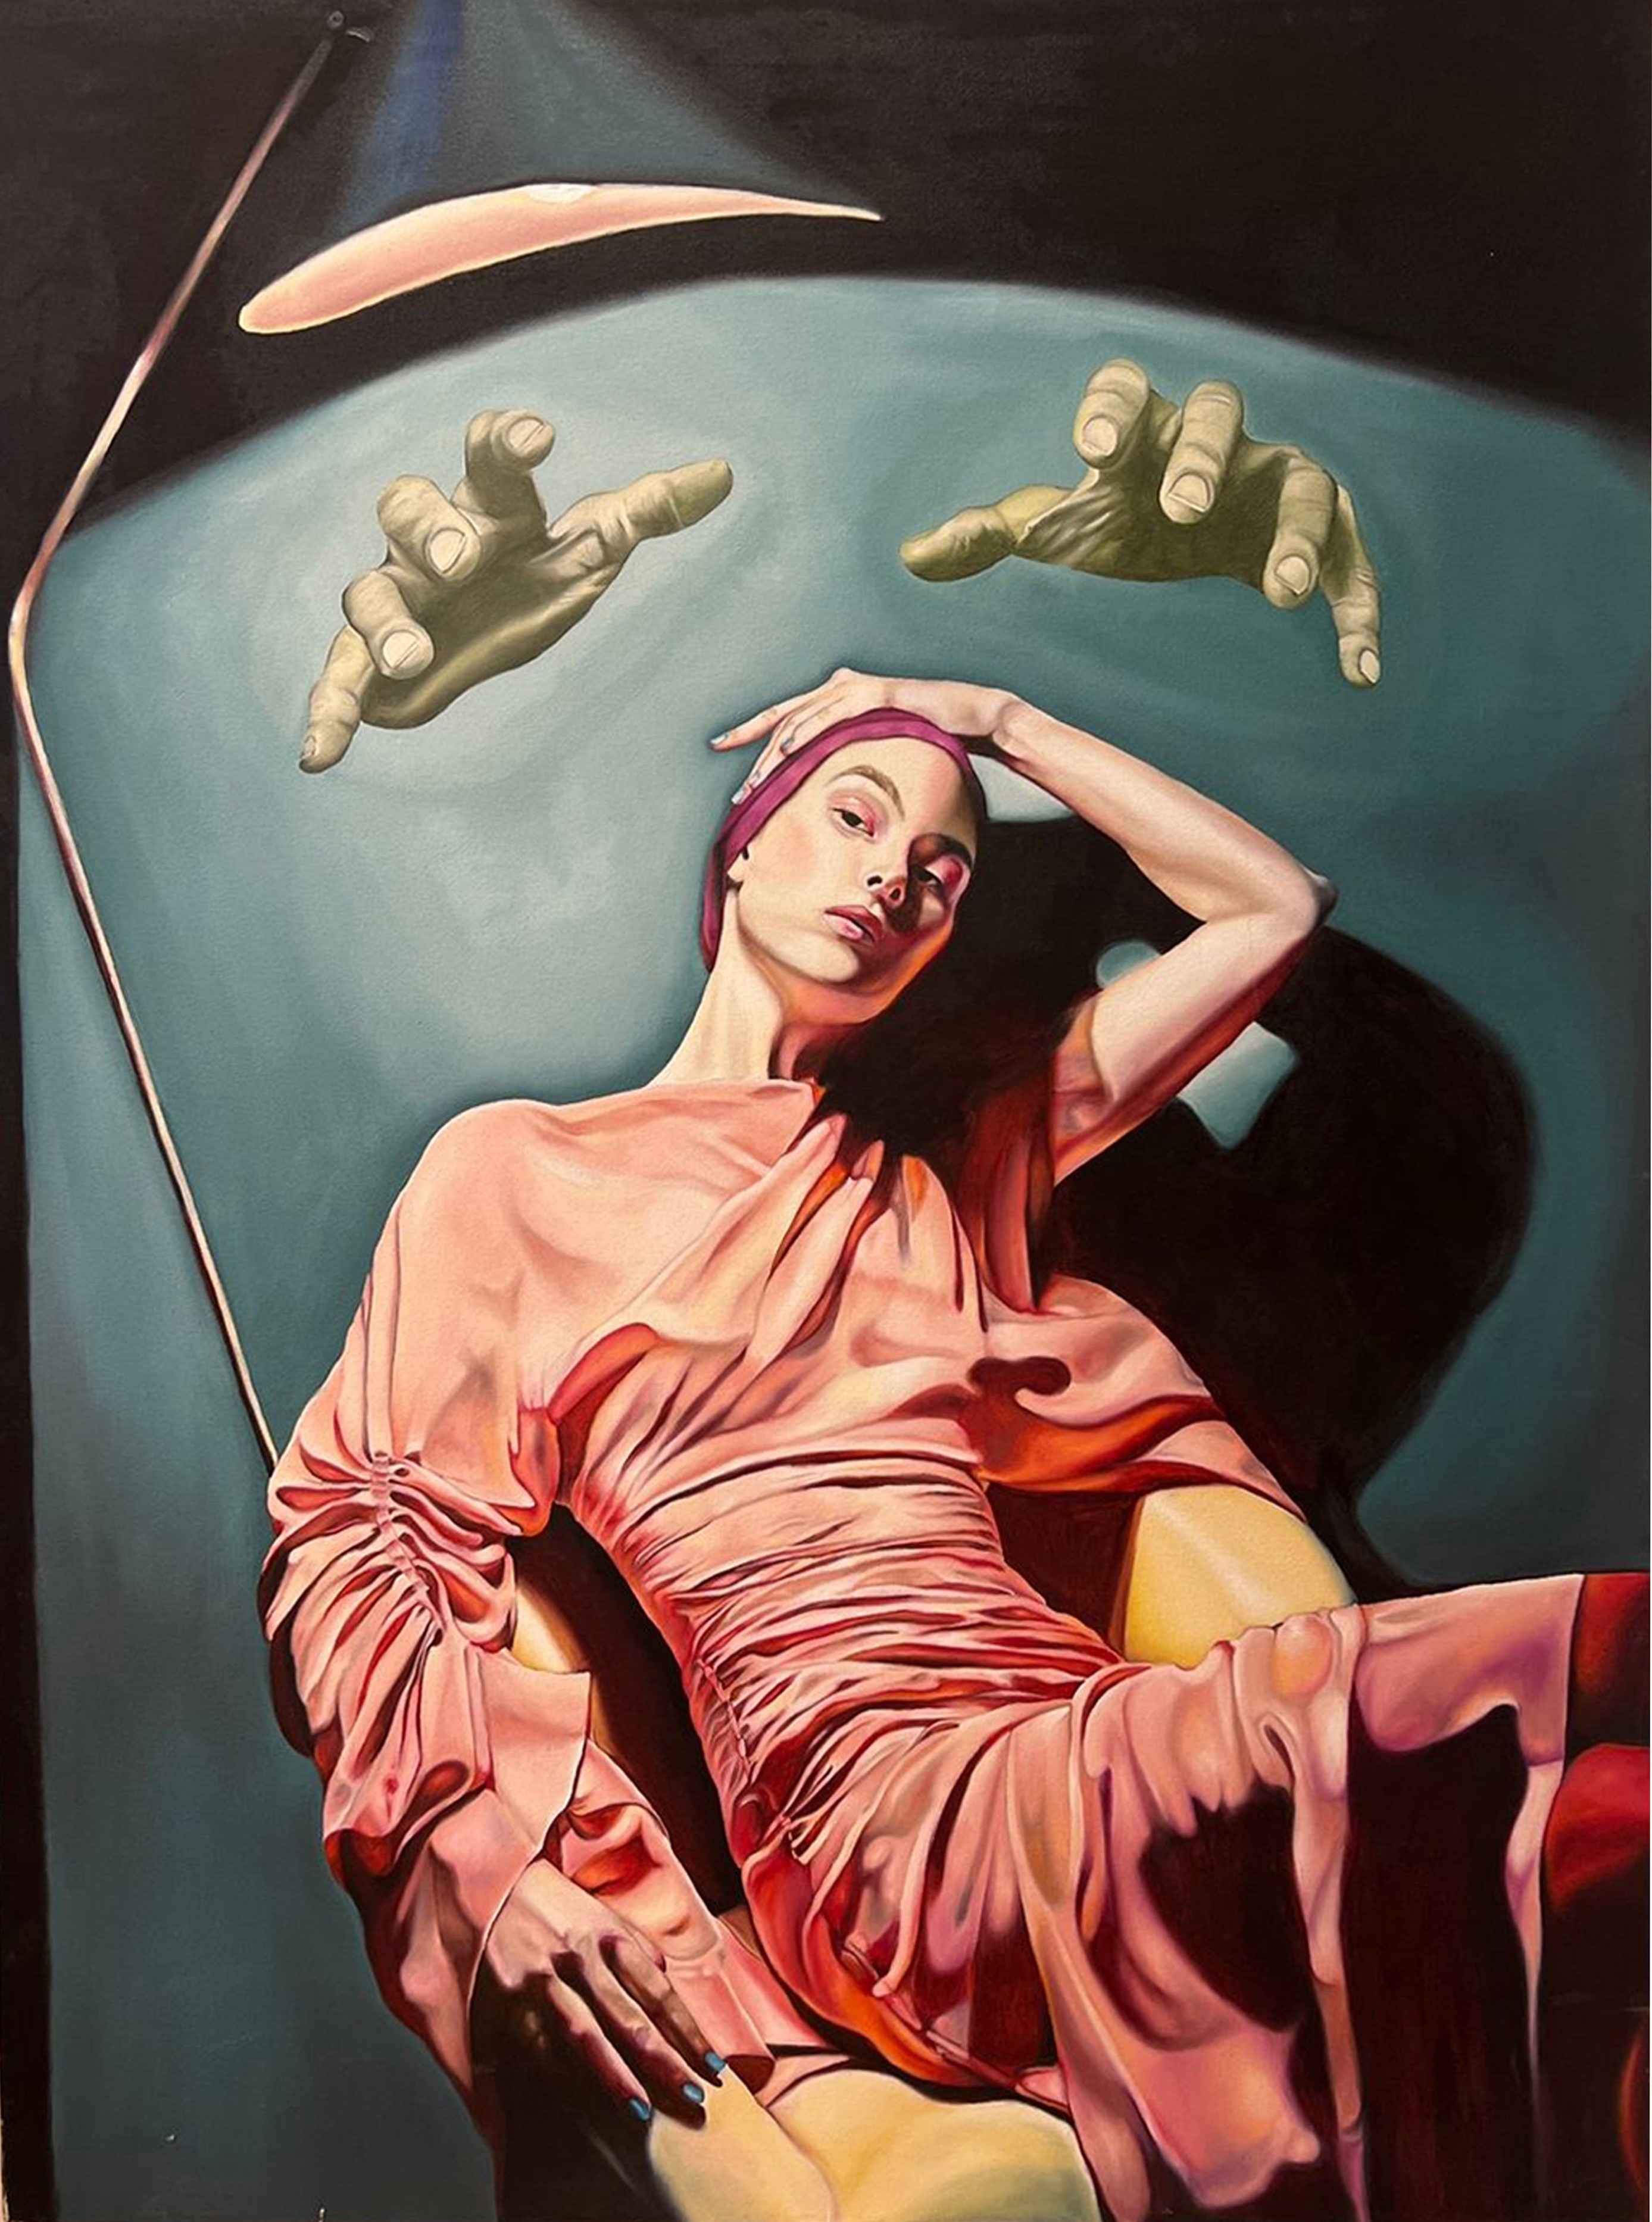 Artist: Aun Raza  <br> Title:  UNTITLED<br> Medium: Oil on canvas<br> Size: 48x36 inches